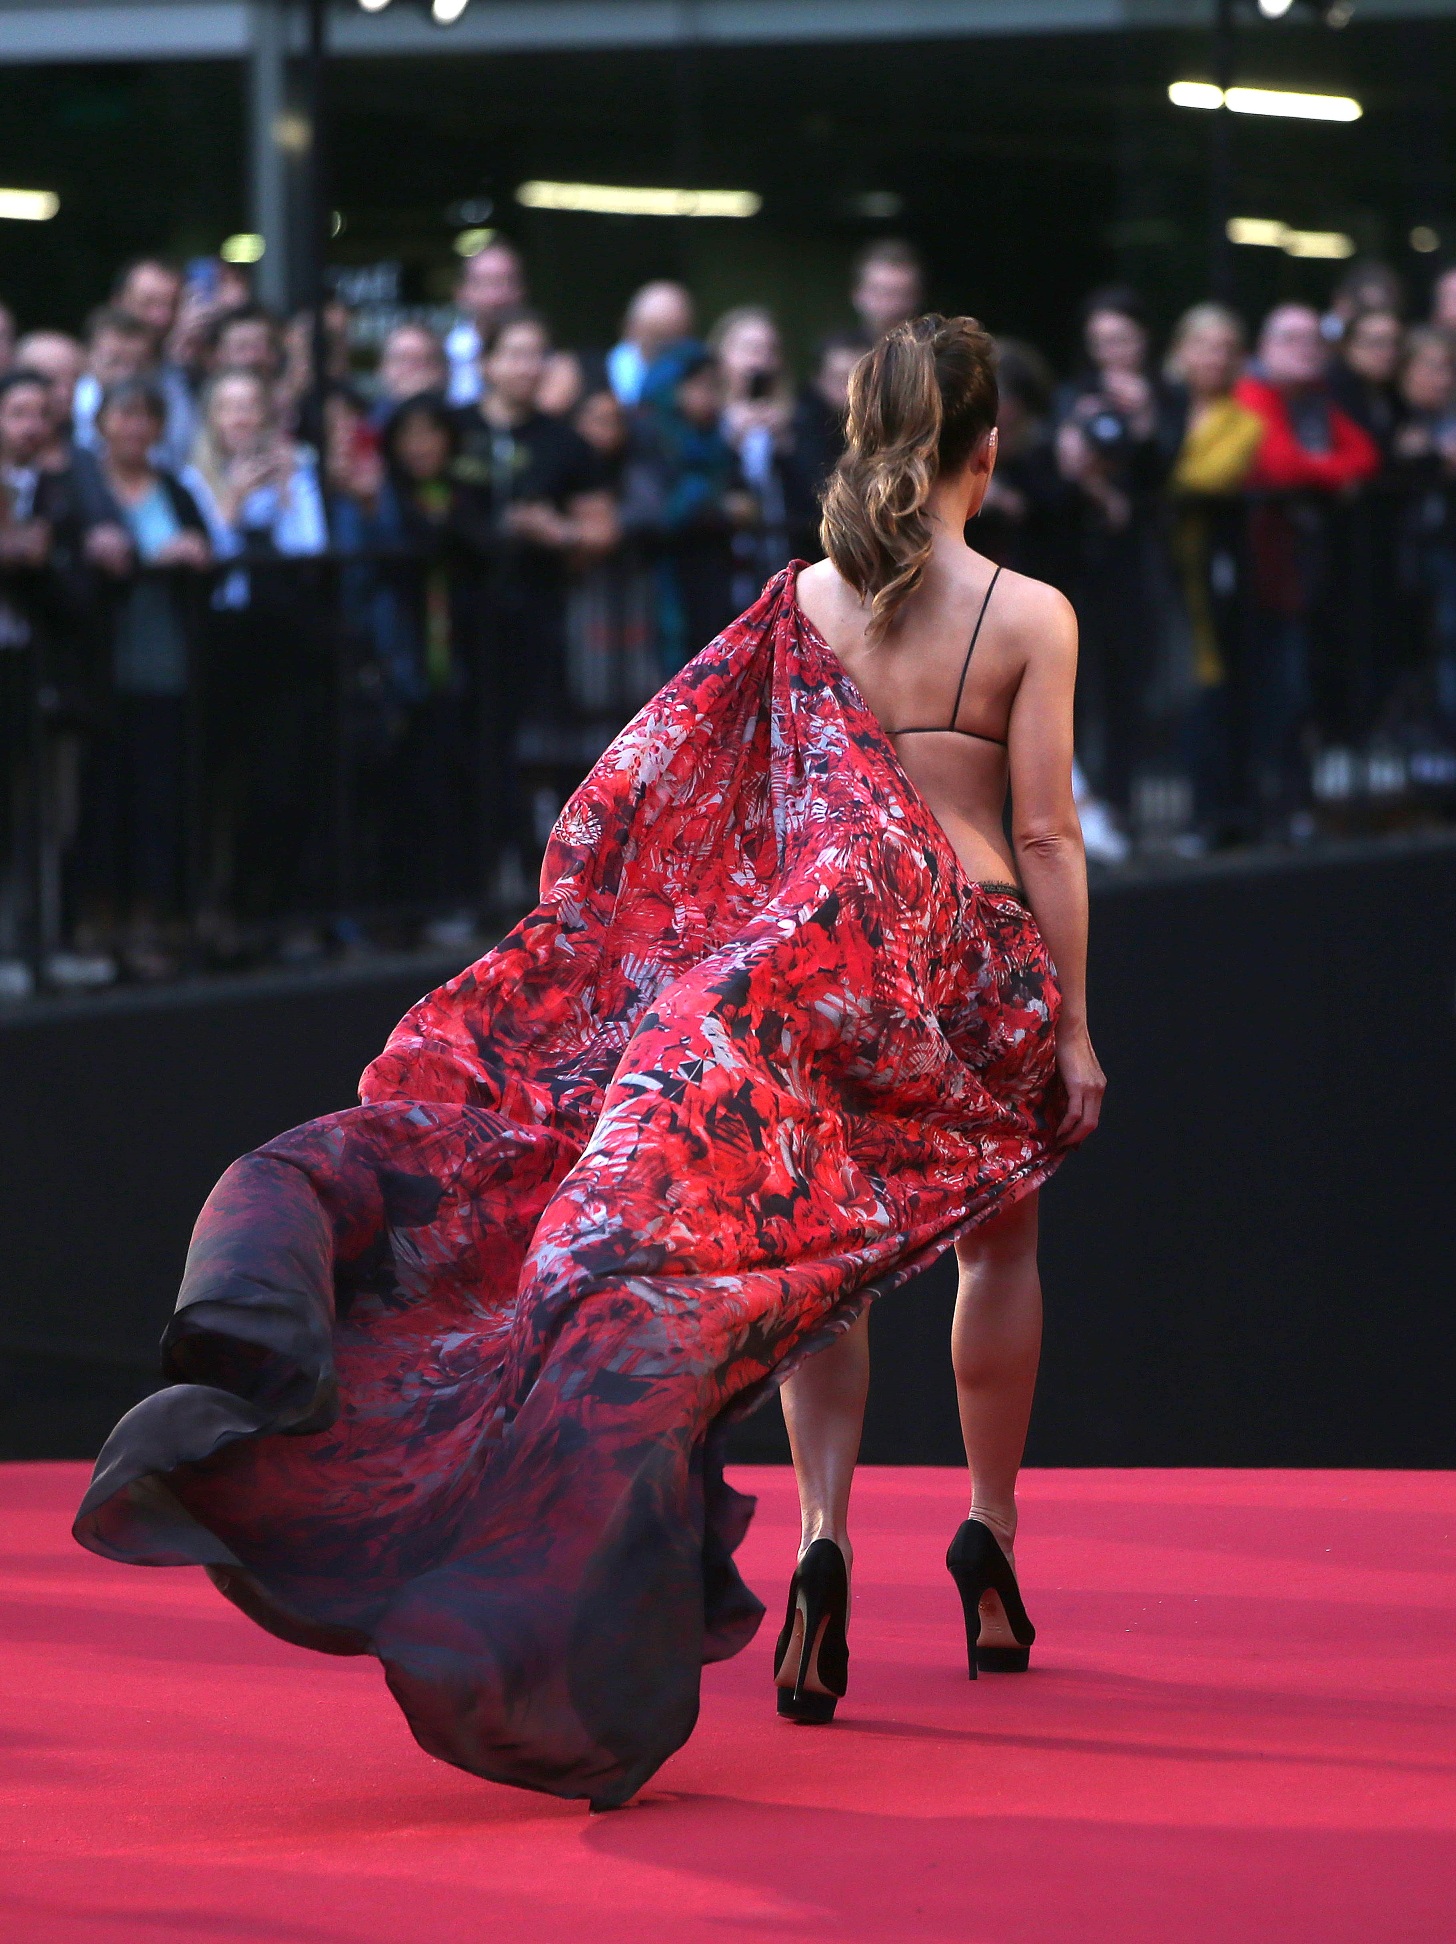 Kate Beckinsale Shocks With Huge Exposing Dress At An Awards Event Set 2